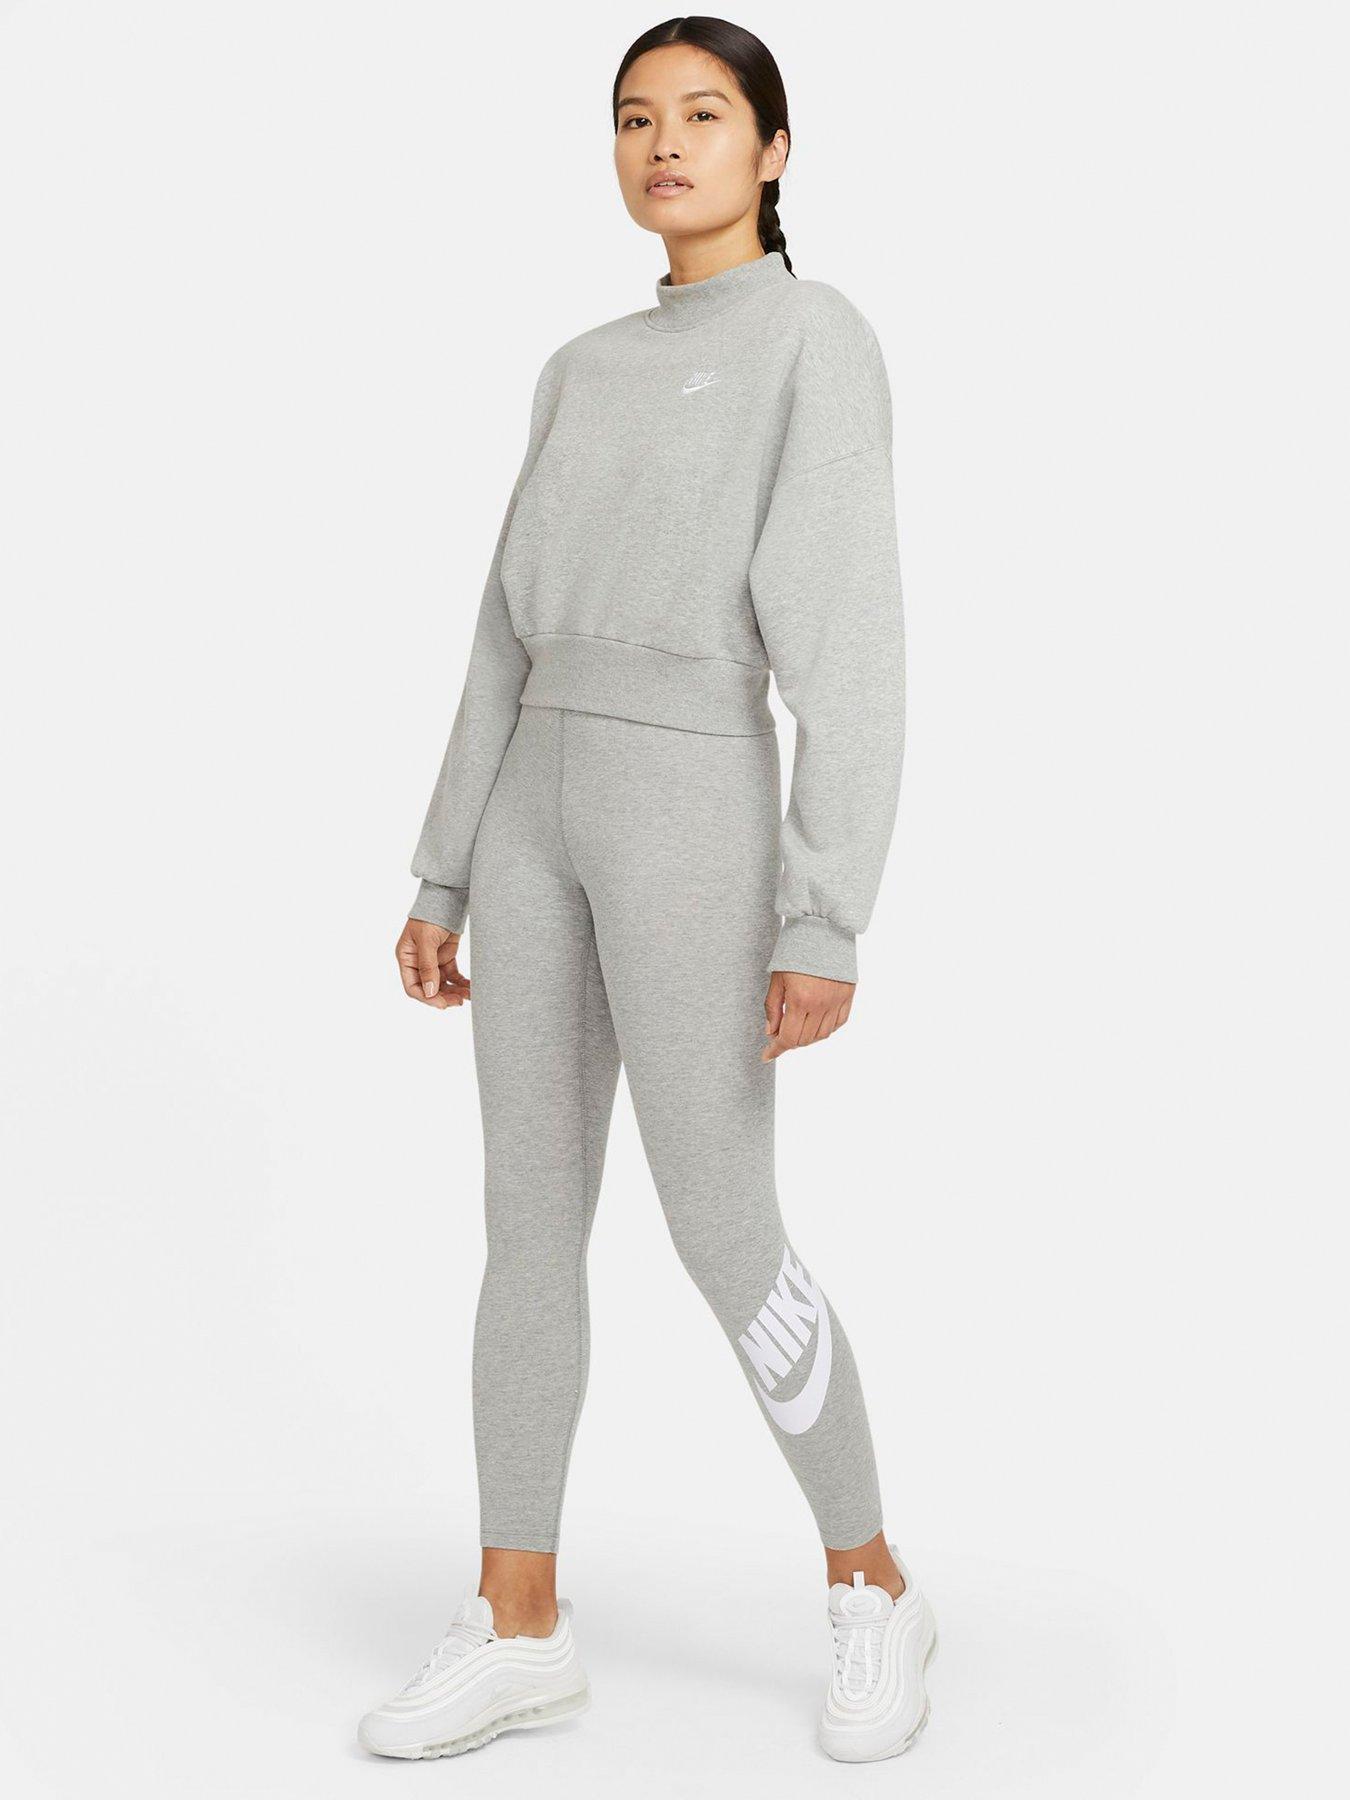 Sportswear NSW Petite Fit Essential Futura Leggings - Dark Grey Heather